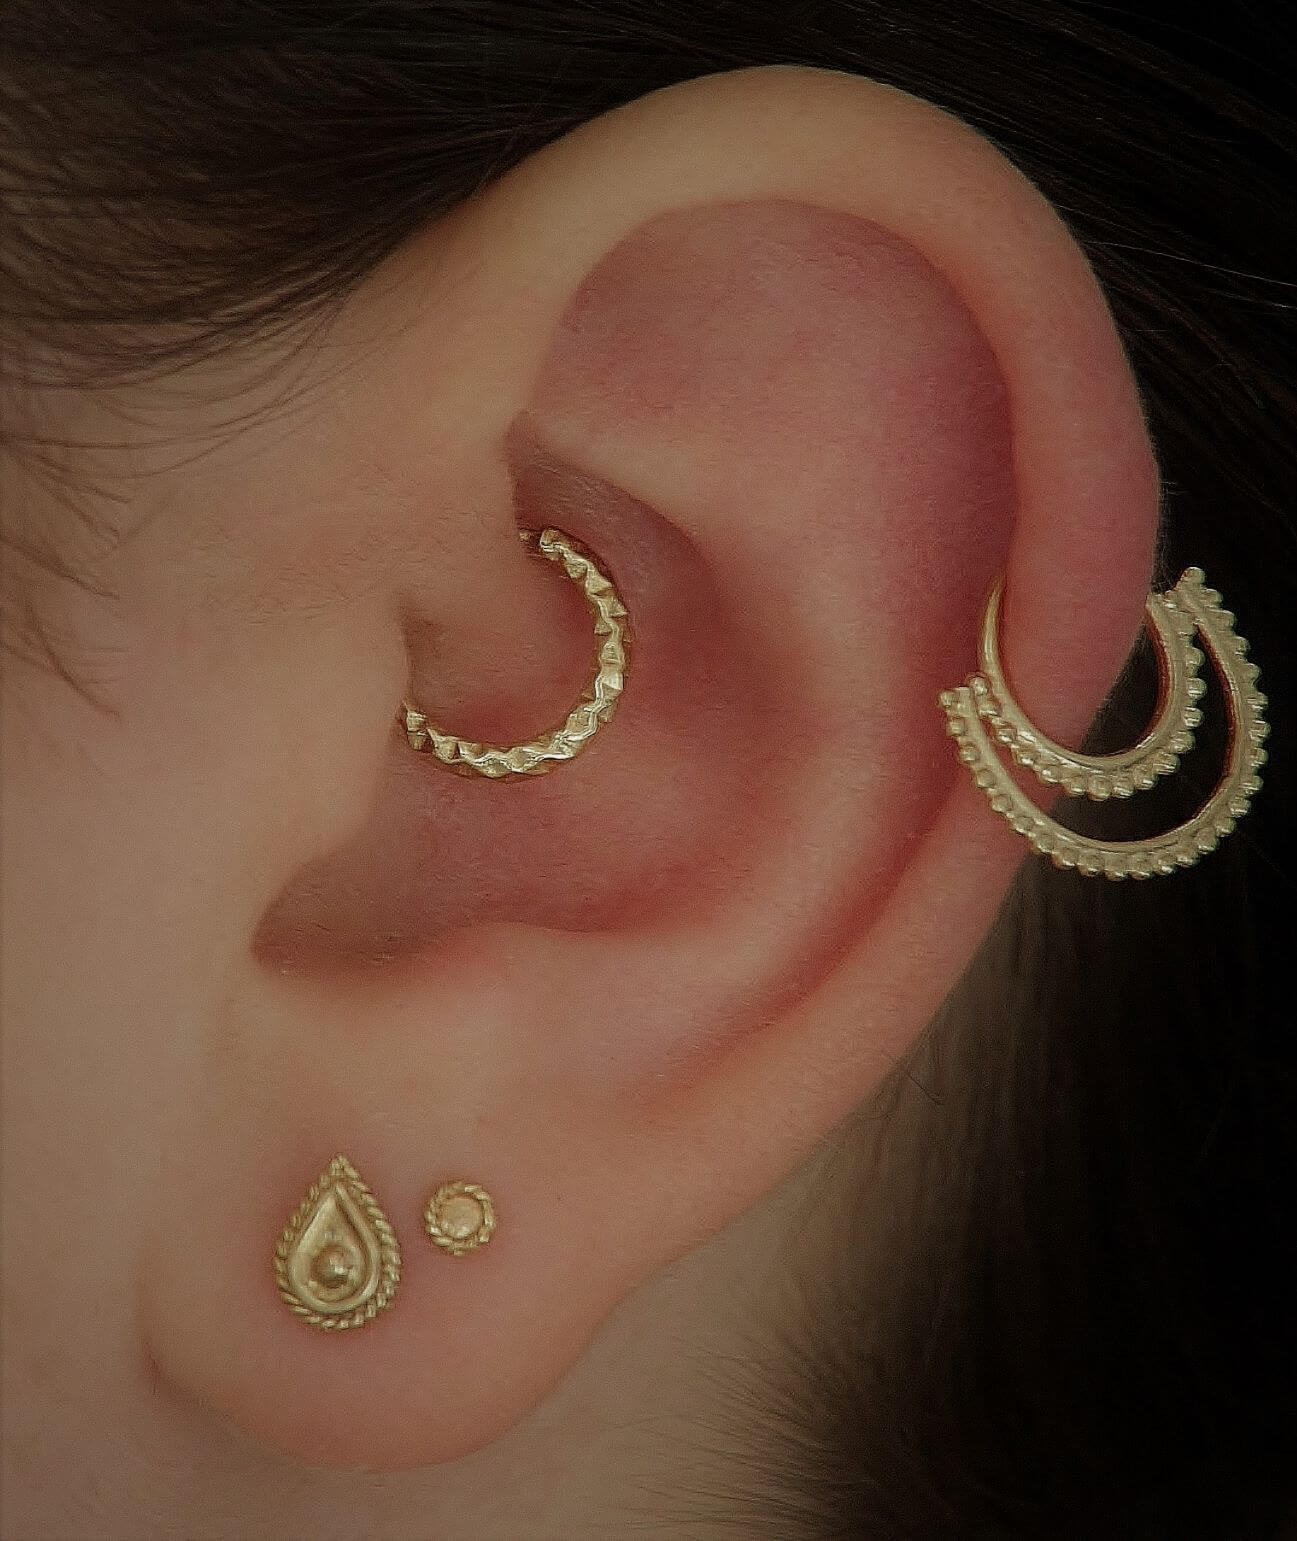 Details more than 153 earring sets for 2 piercings super hot  seveneduvn